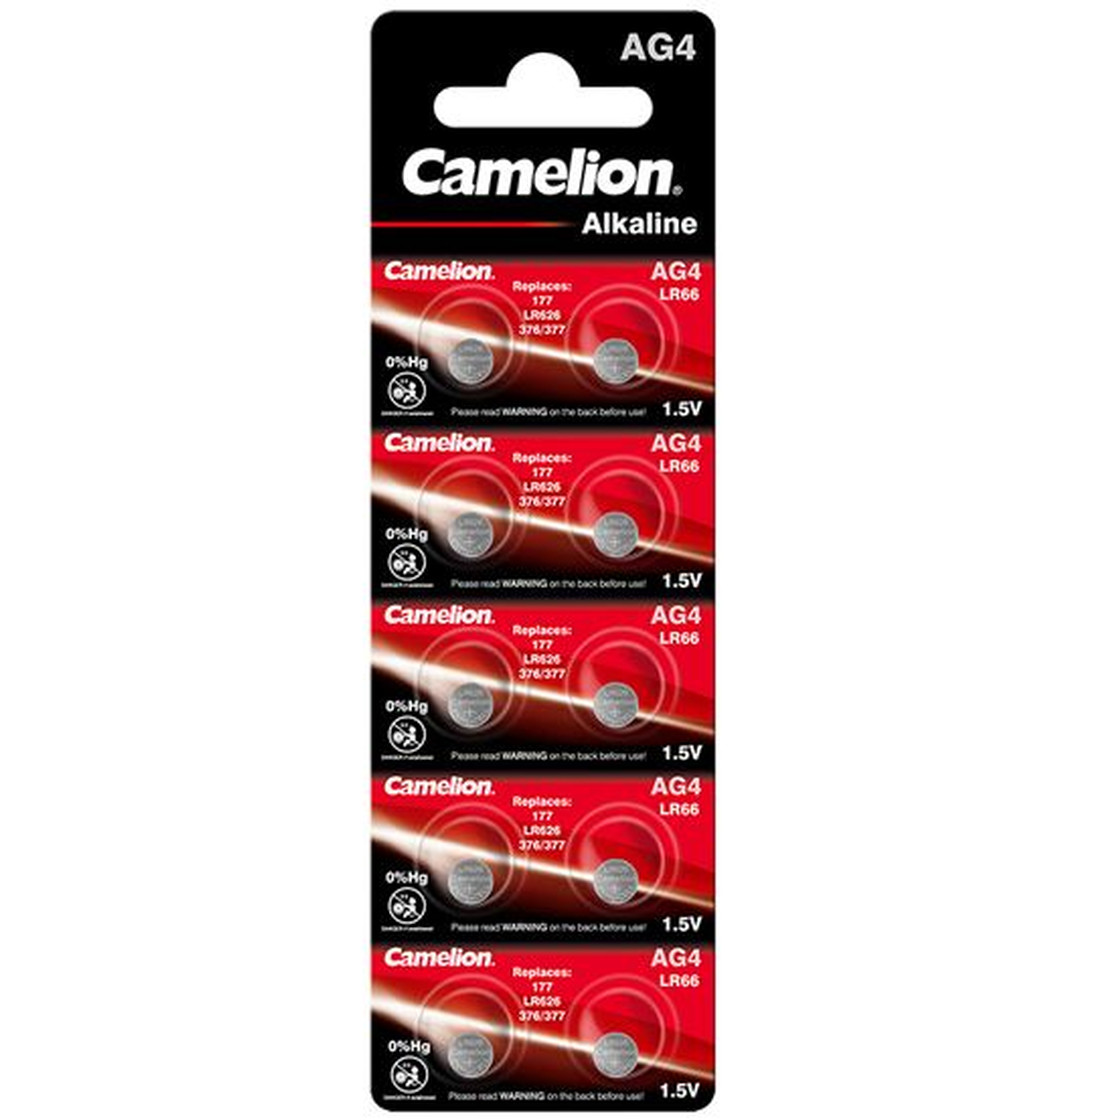 Camelion Alkaline AG4 Knopfzelle 377 LR66 LR626 Batterien 10er Pack